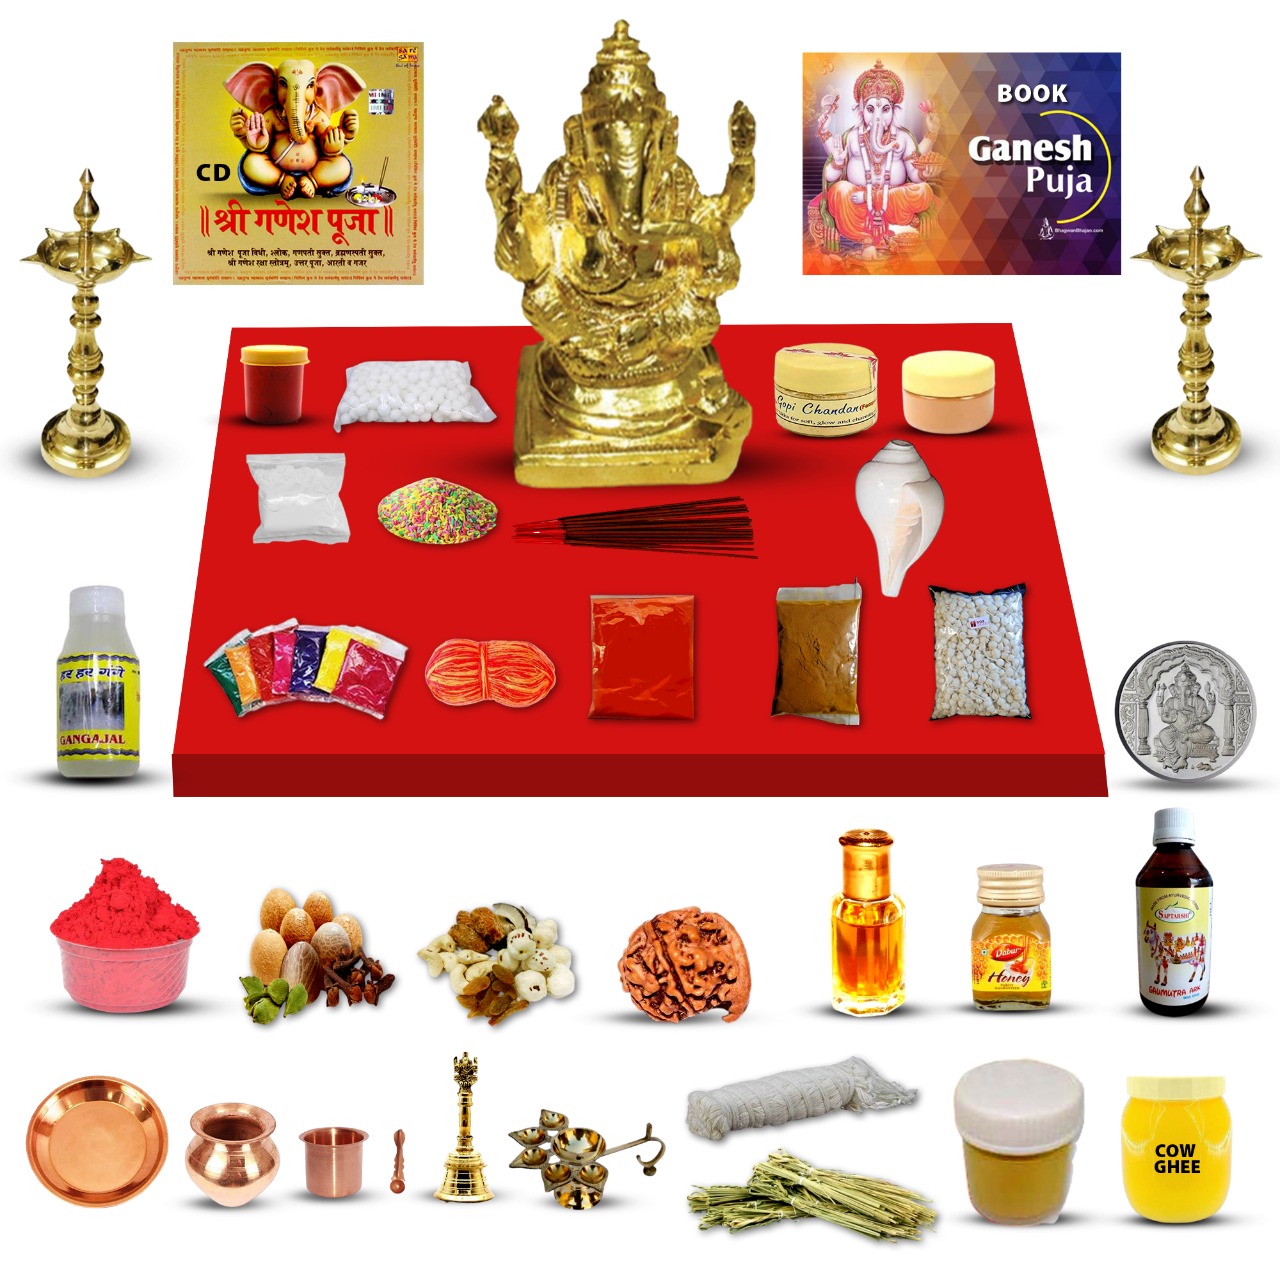 Sampoorna Ganesha Puja Kit - Delivery outside India